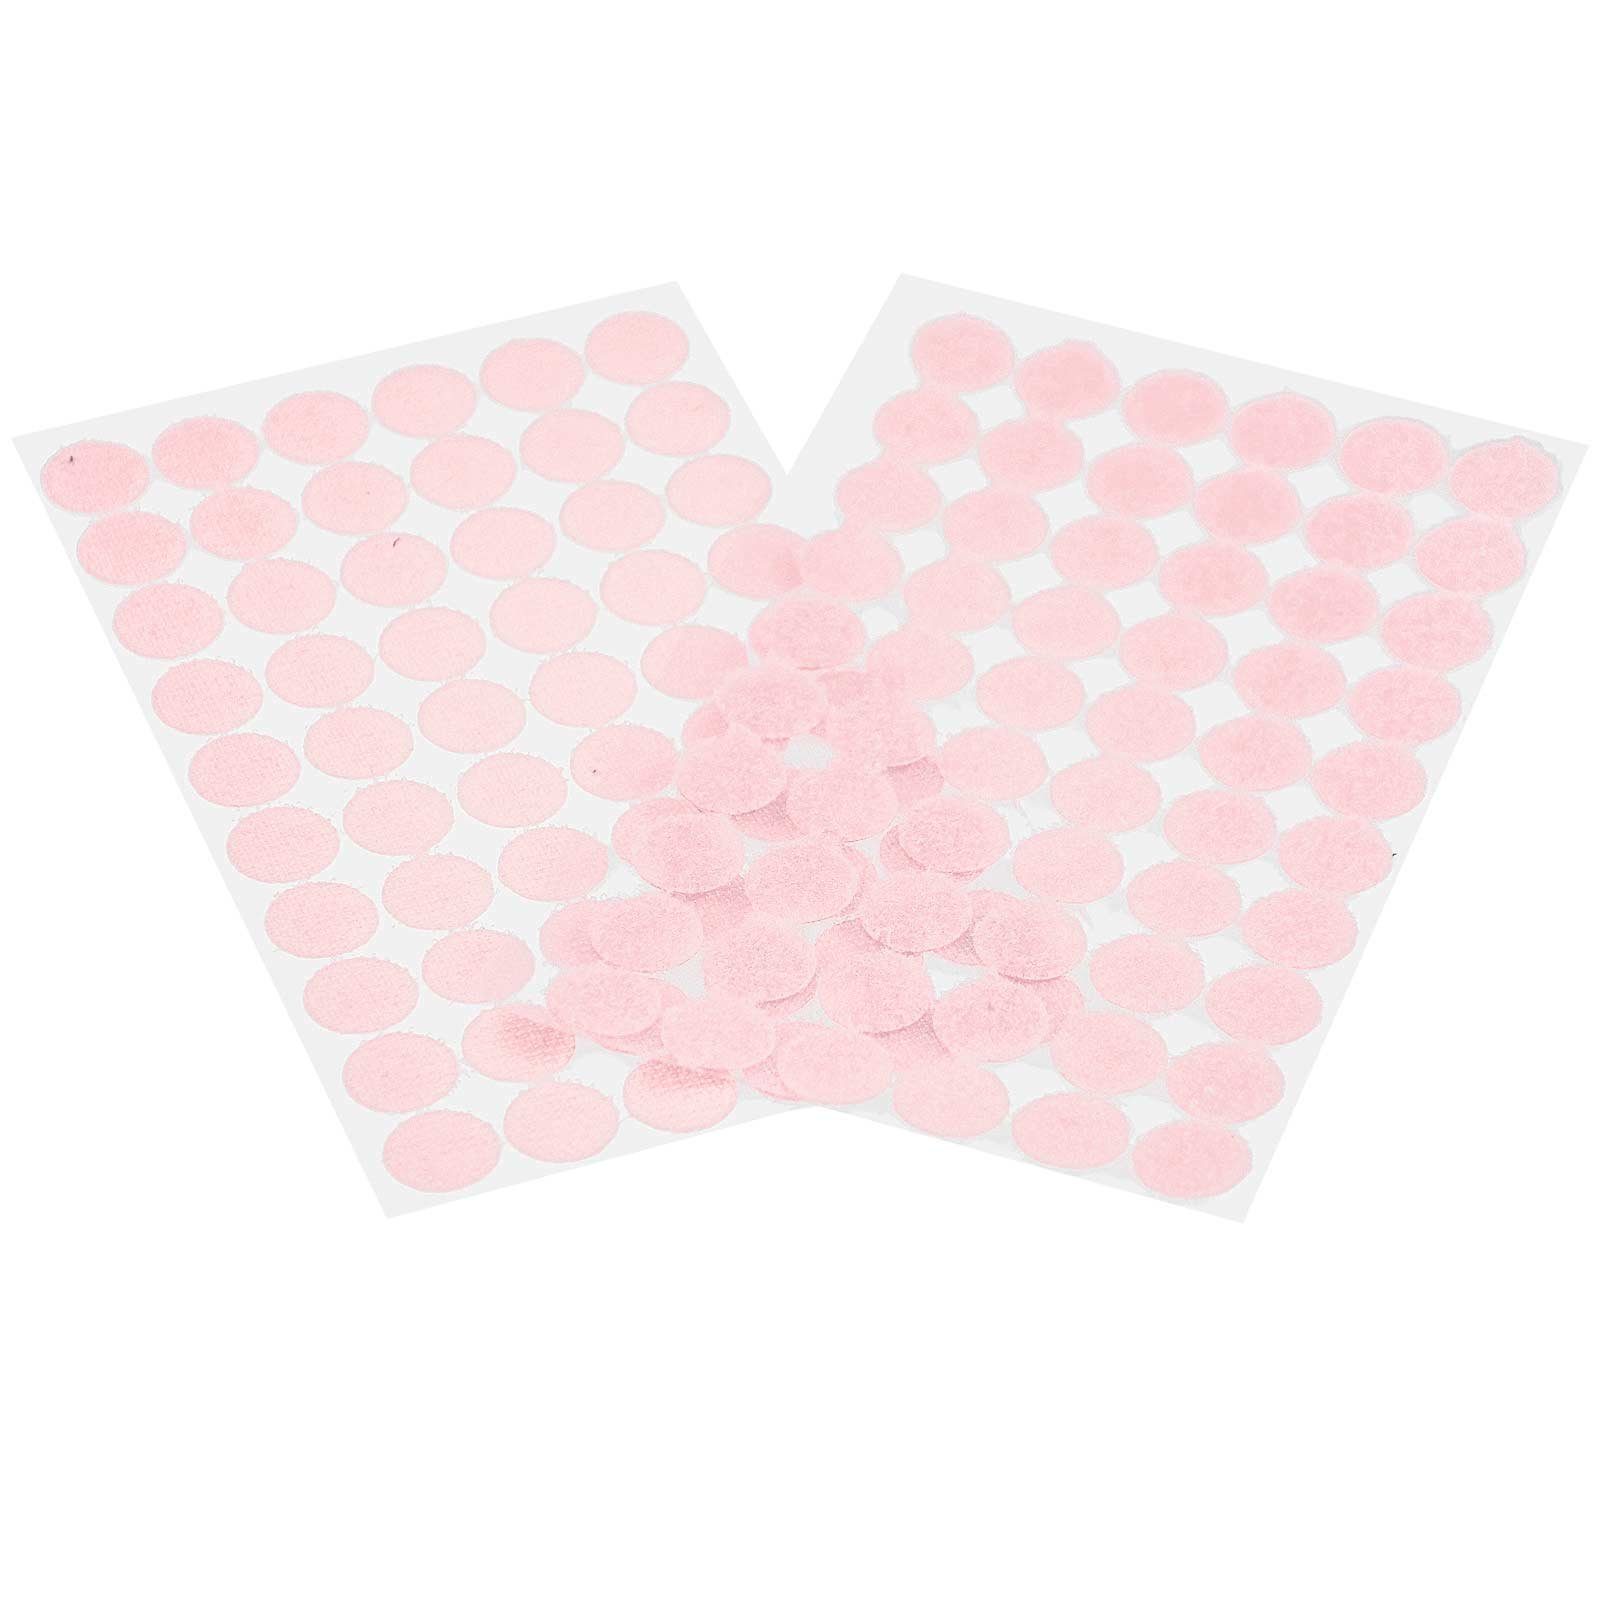 rosa 15mm 60 Klettband maDDma, selbstklebend, Klettpunkte